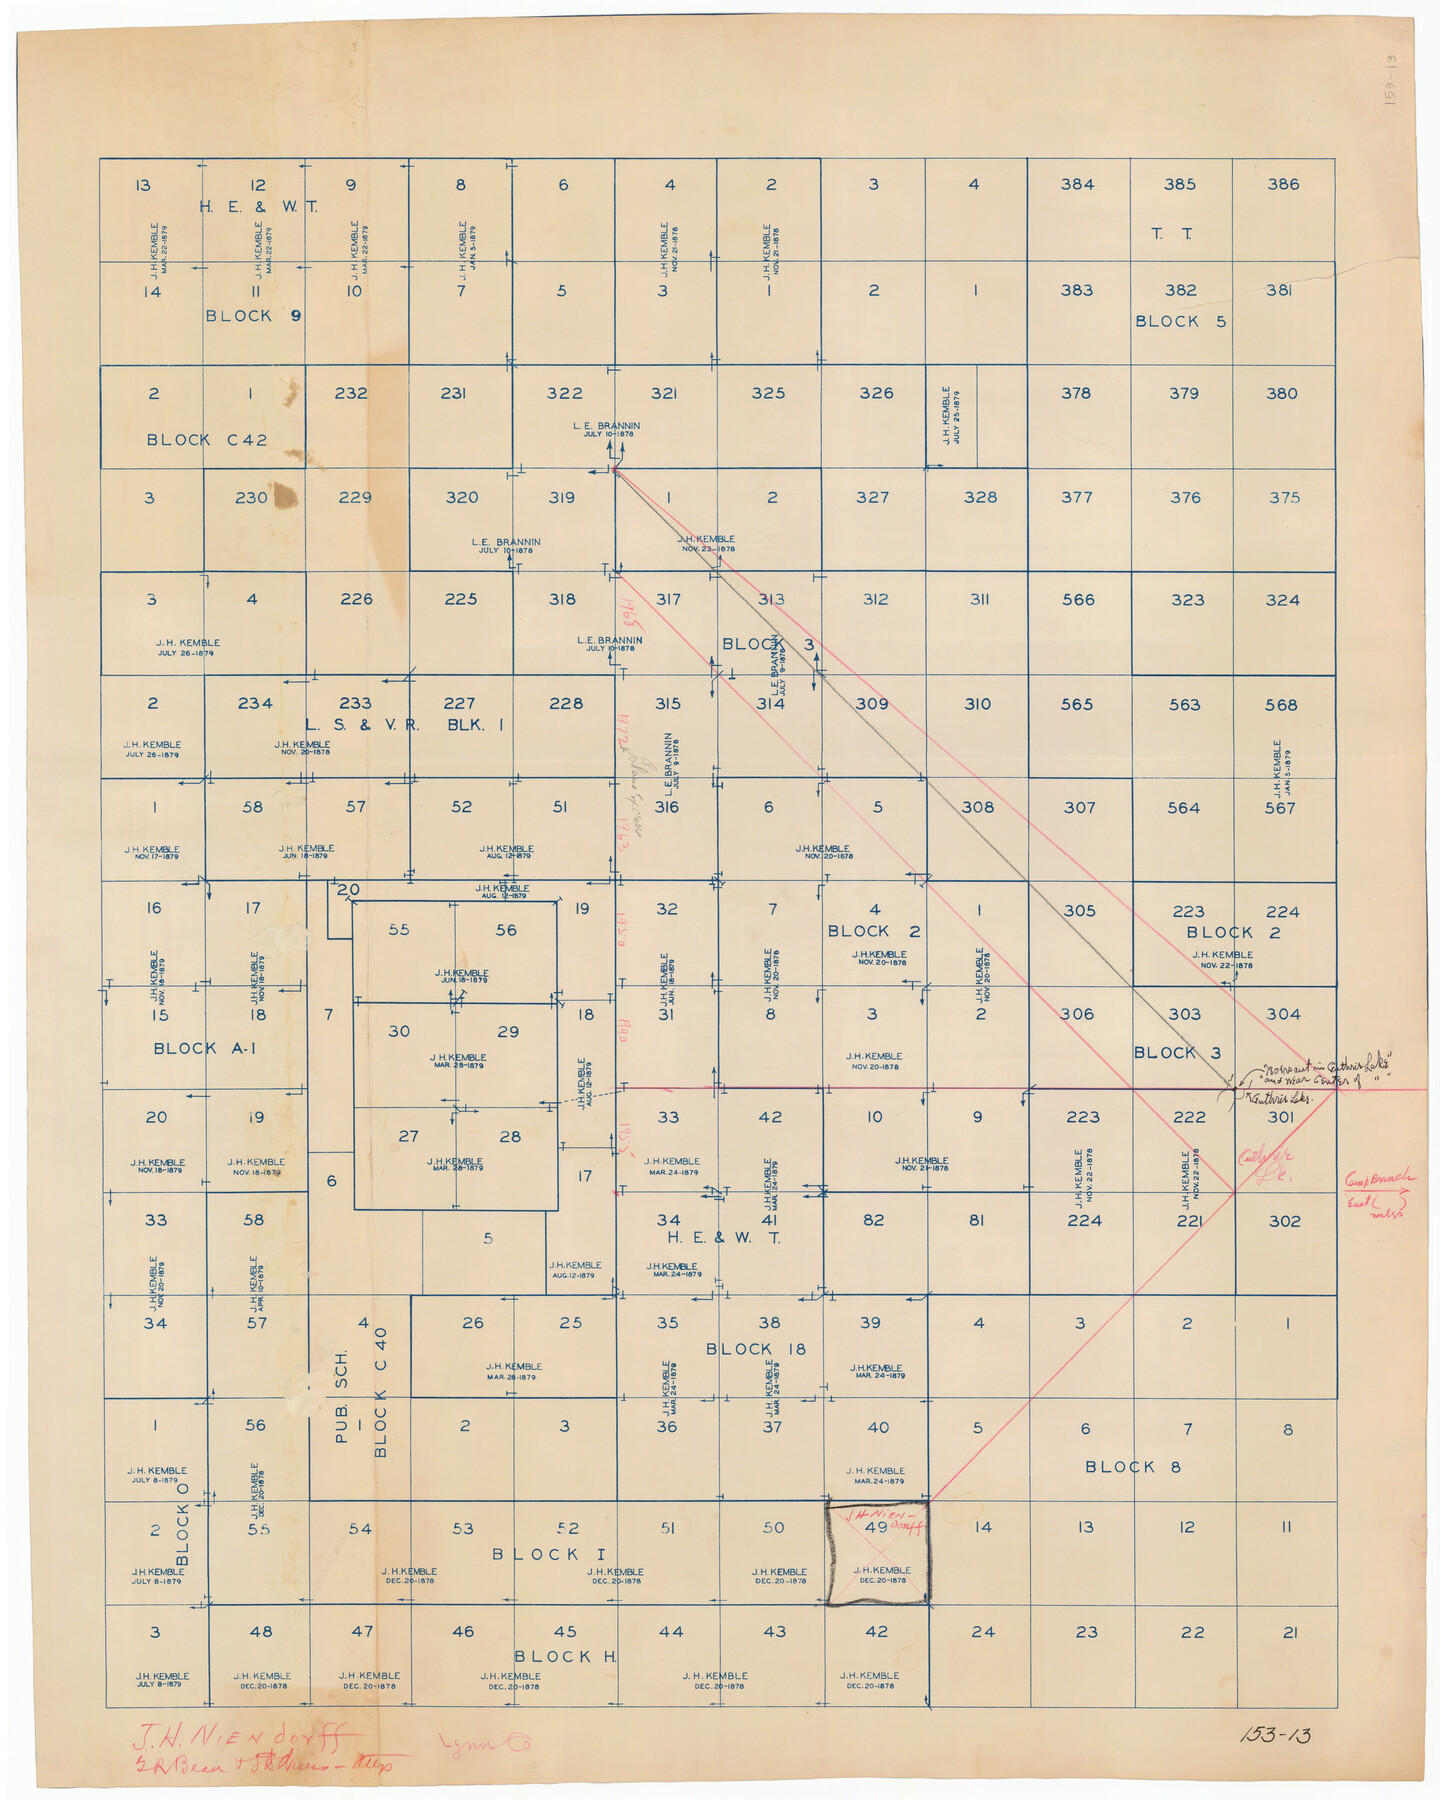 91354, [H. E. & W. T. Block 9, L. S. & V. Block 1, Public School Land Block C-40, Portion of Block H], Twichell Survey Records